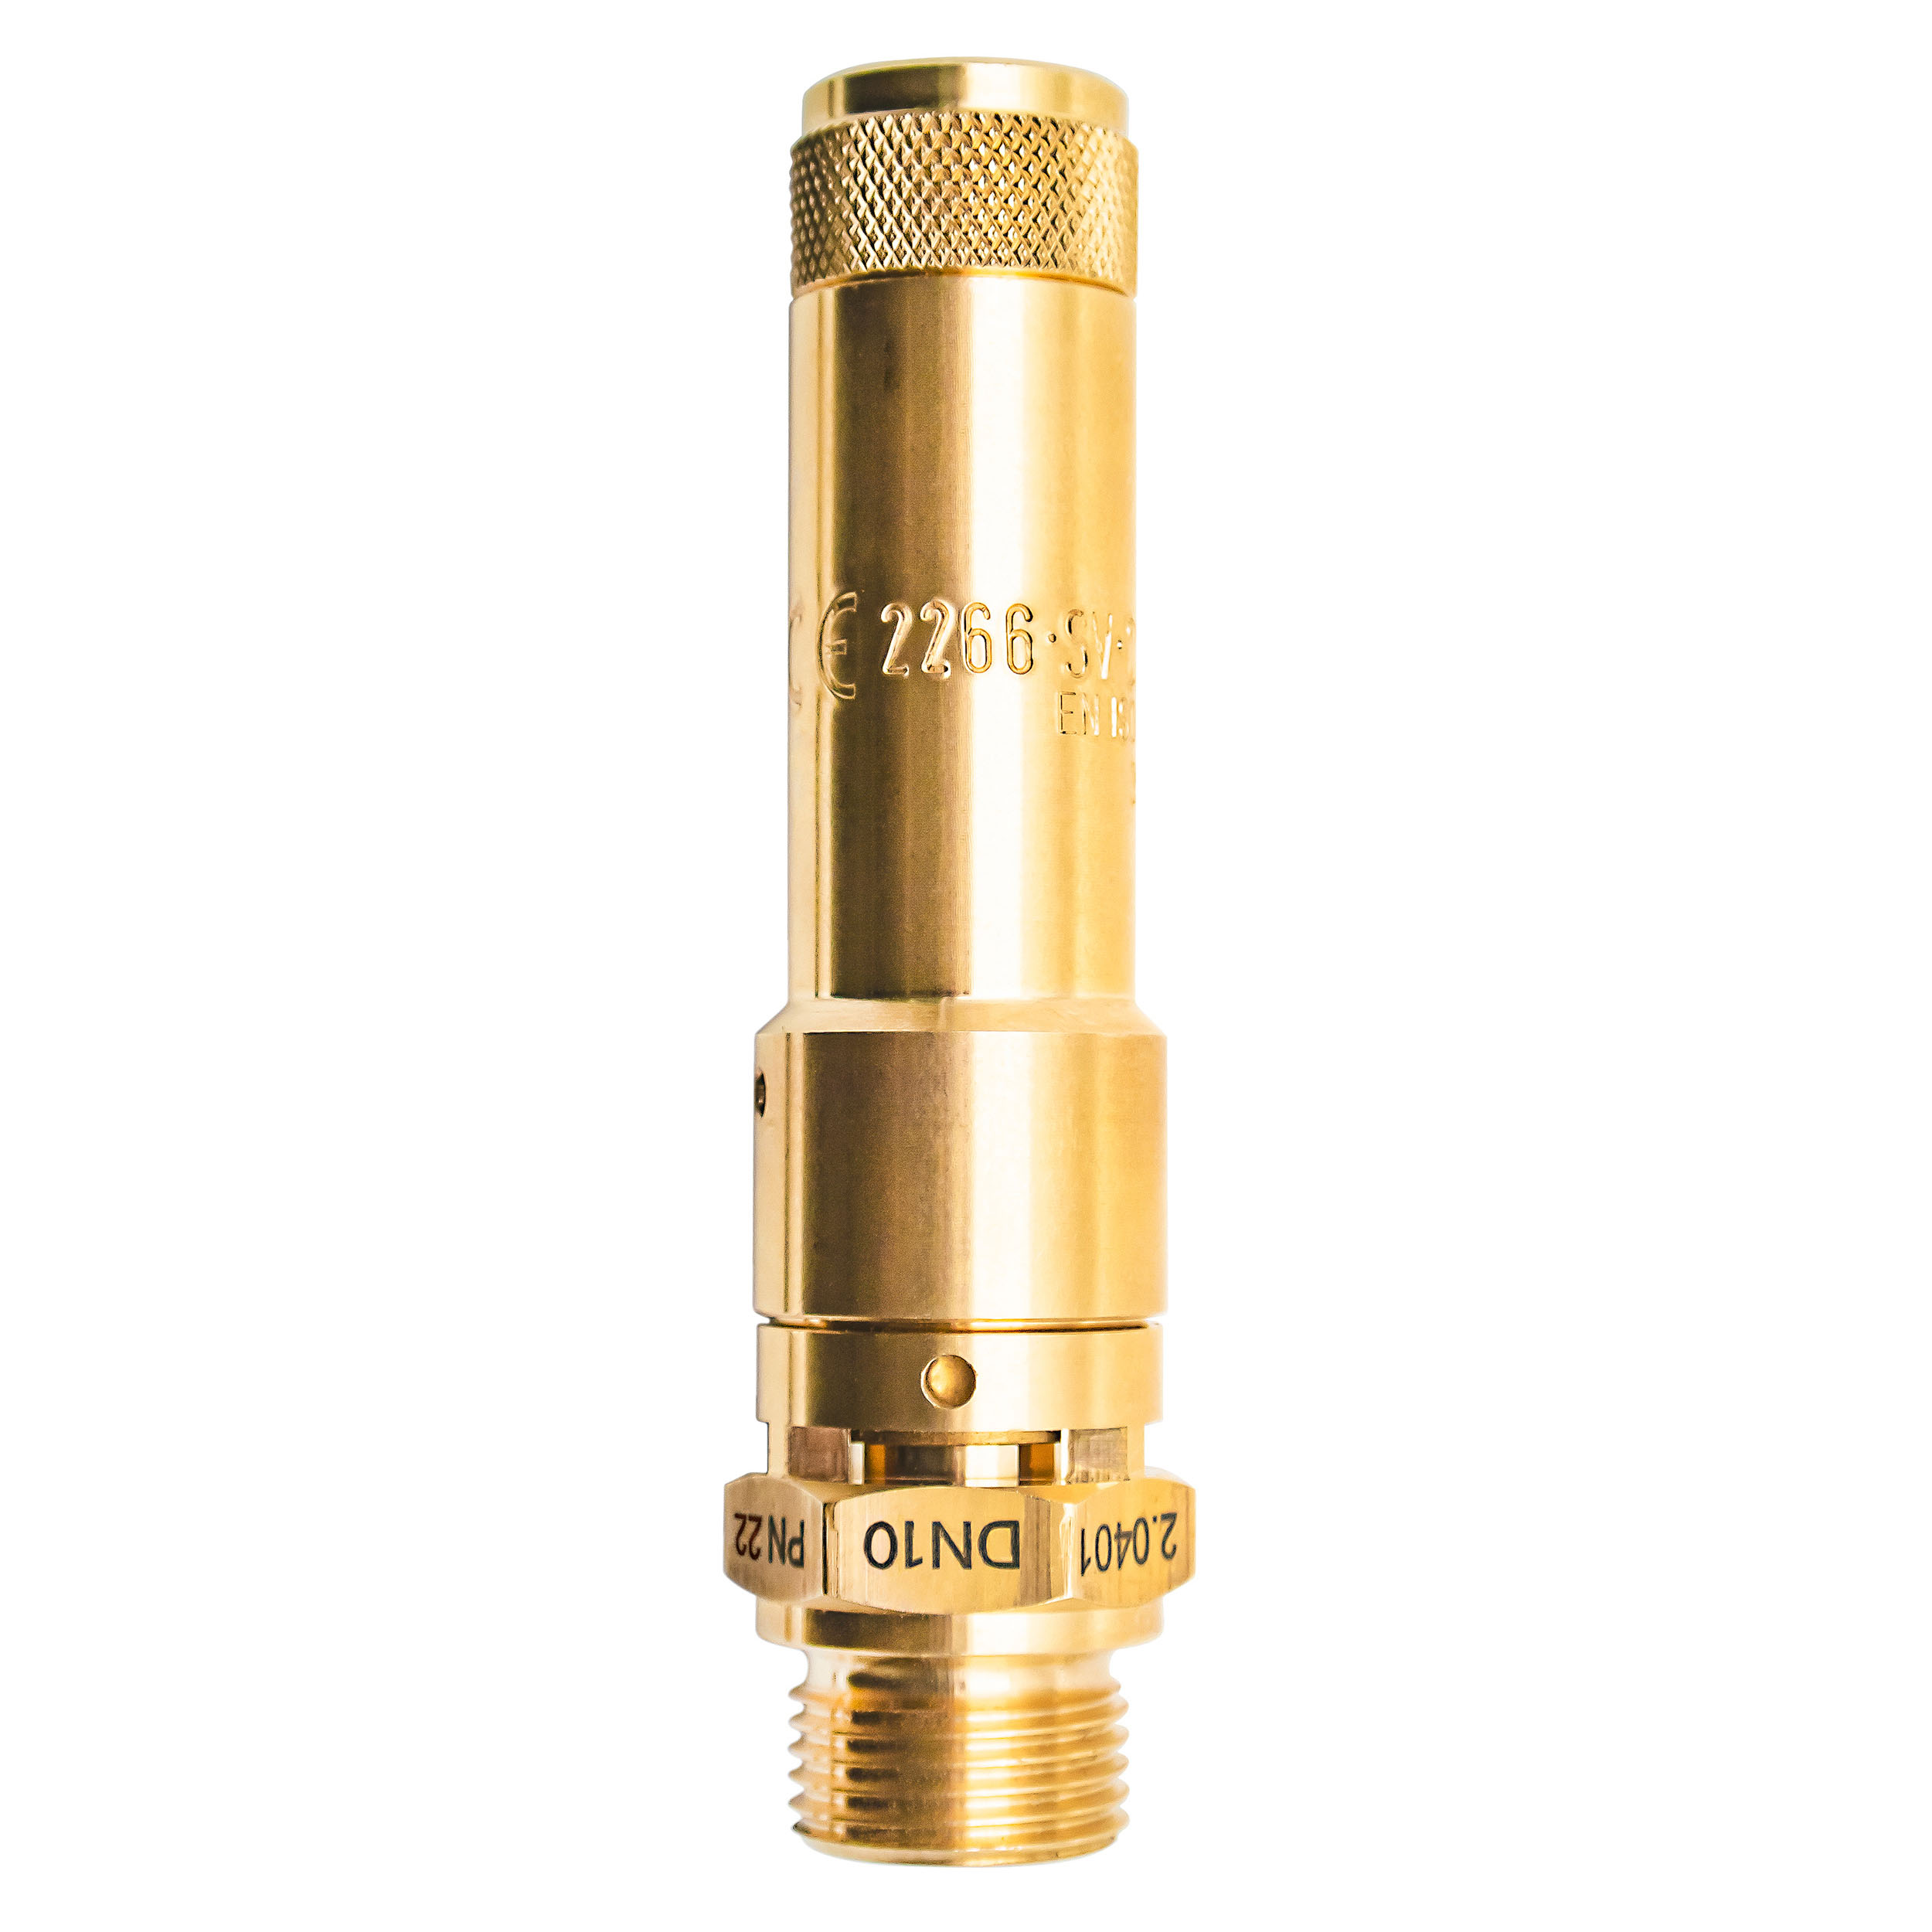 Savety valve component tested DN 10, G¾, set pressure: 7.0 bar (101,5 psi)